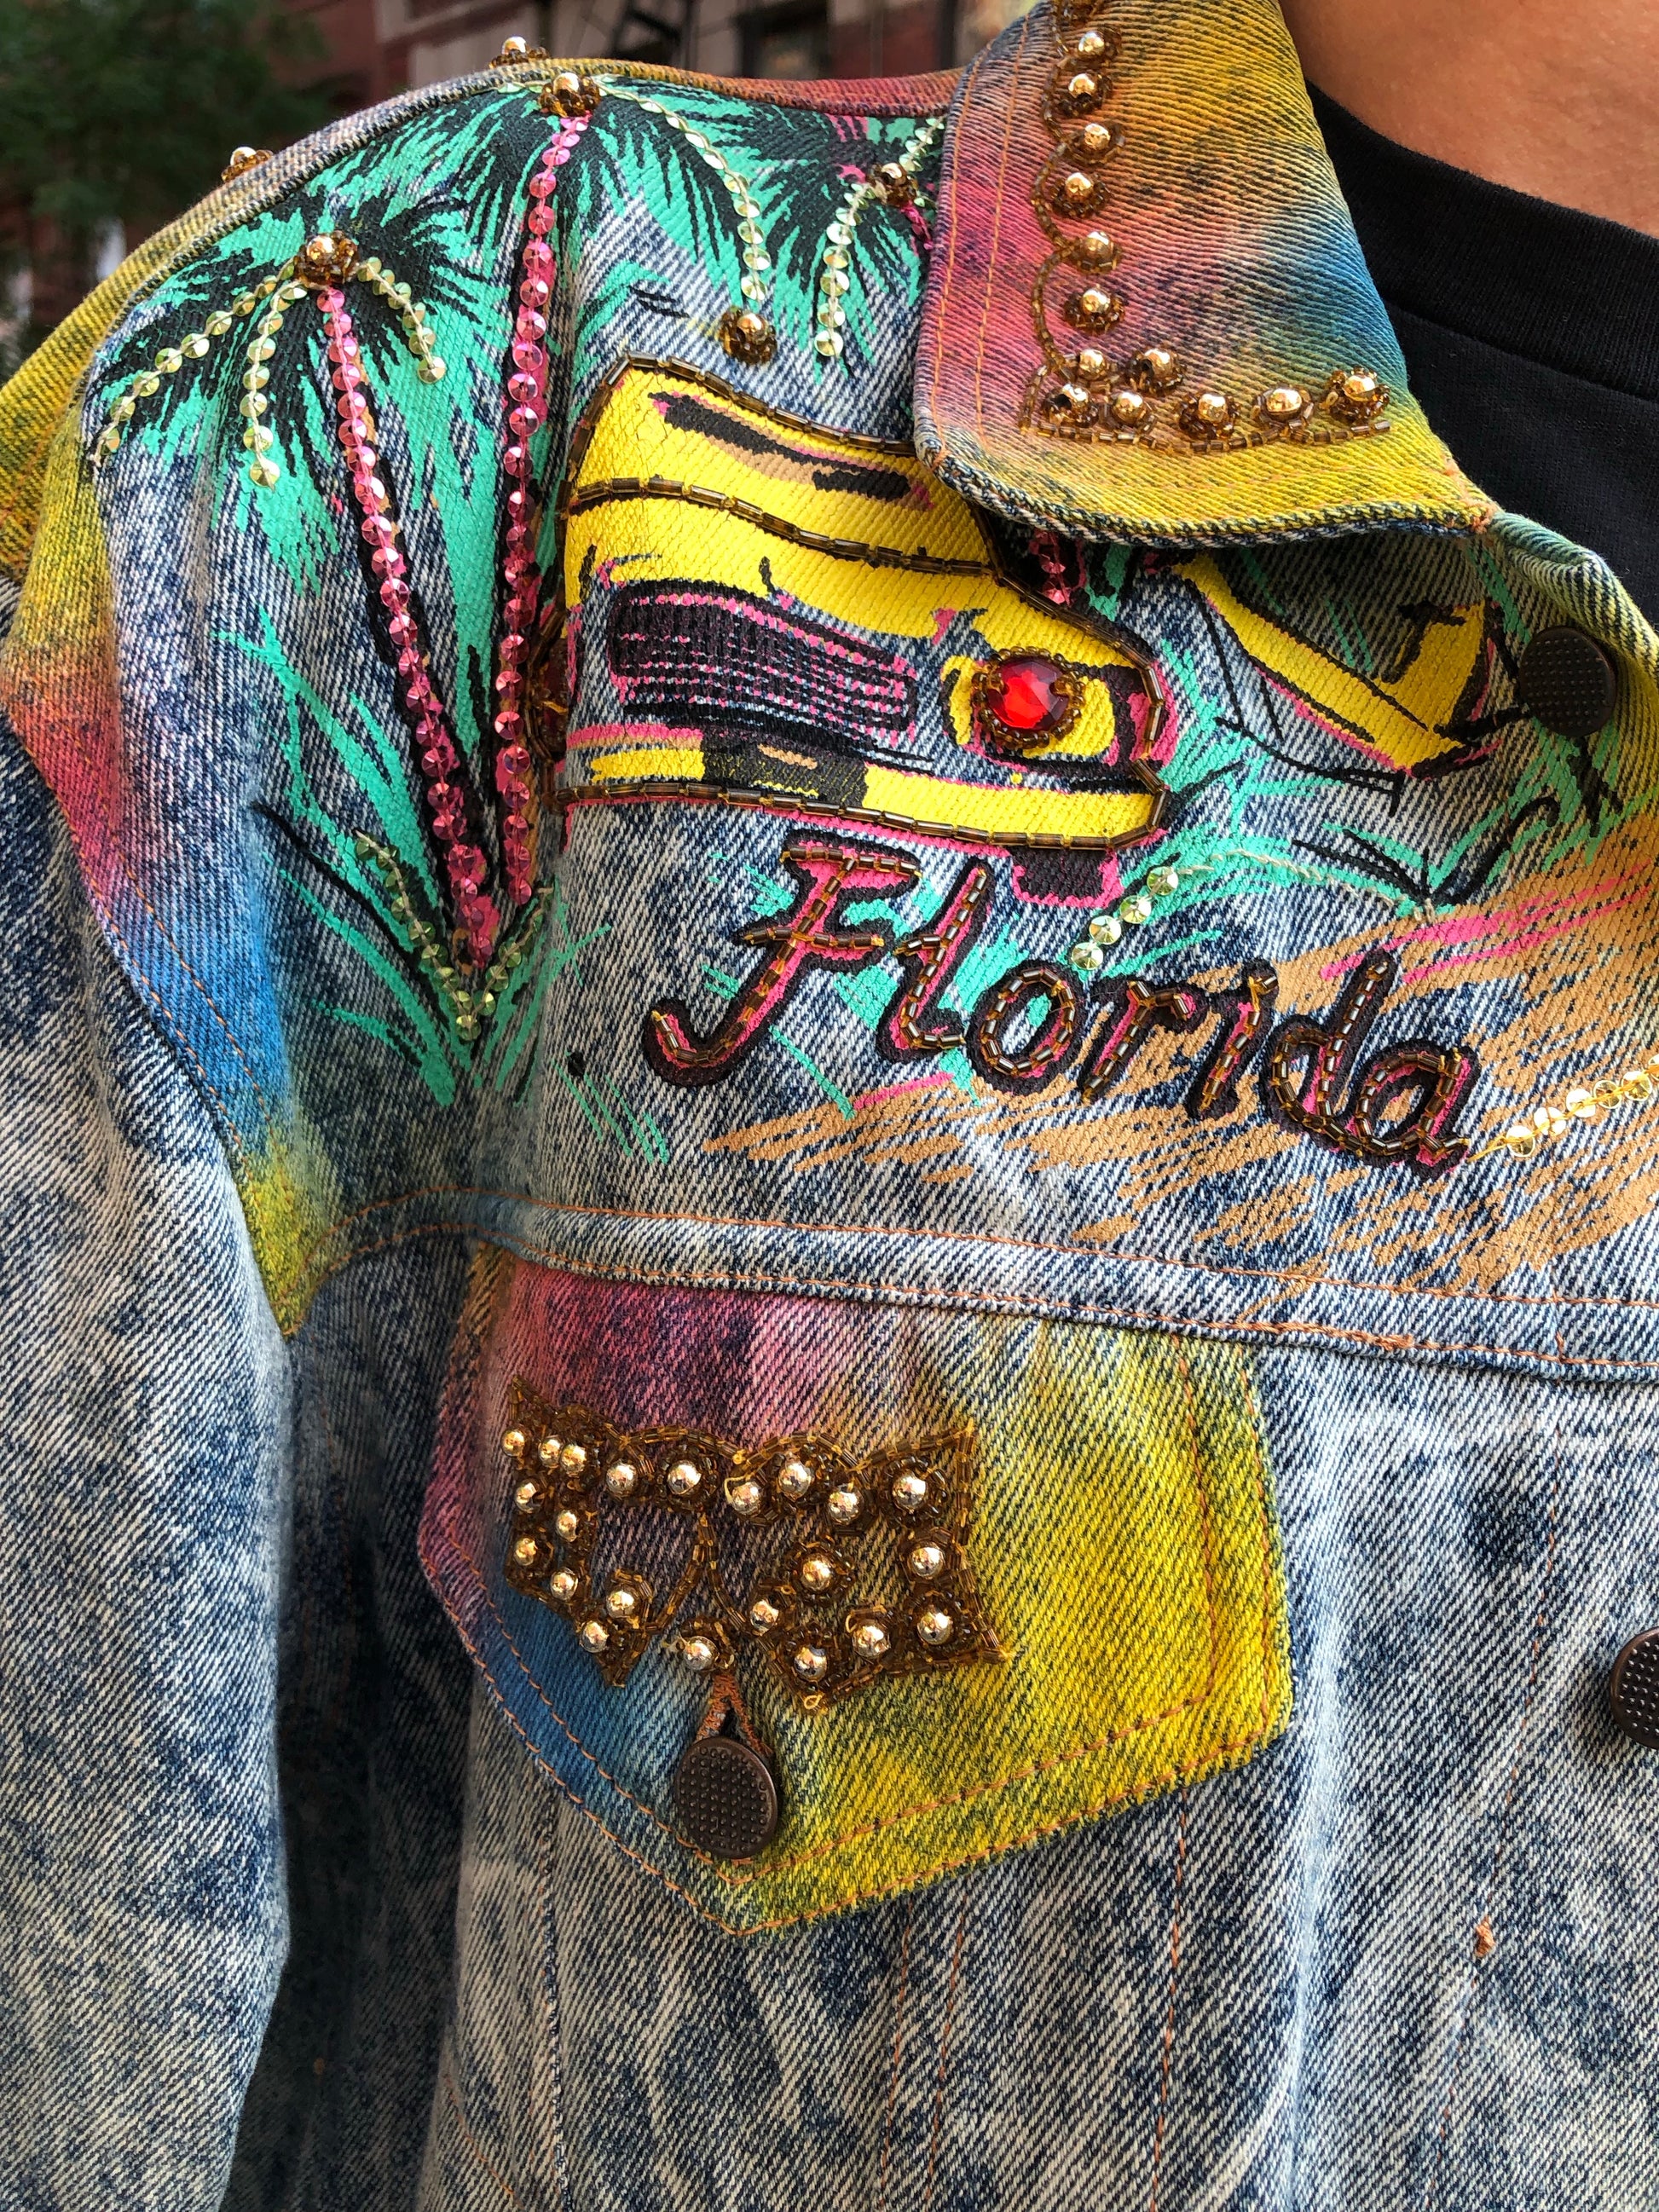 Vintage 80s 90s Miami theme bedazzled Jean Jacket - Spark Pretty